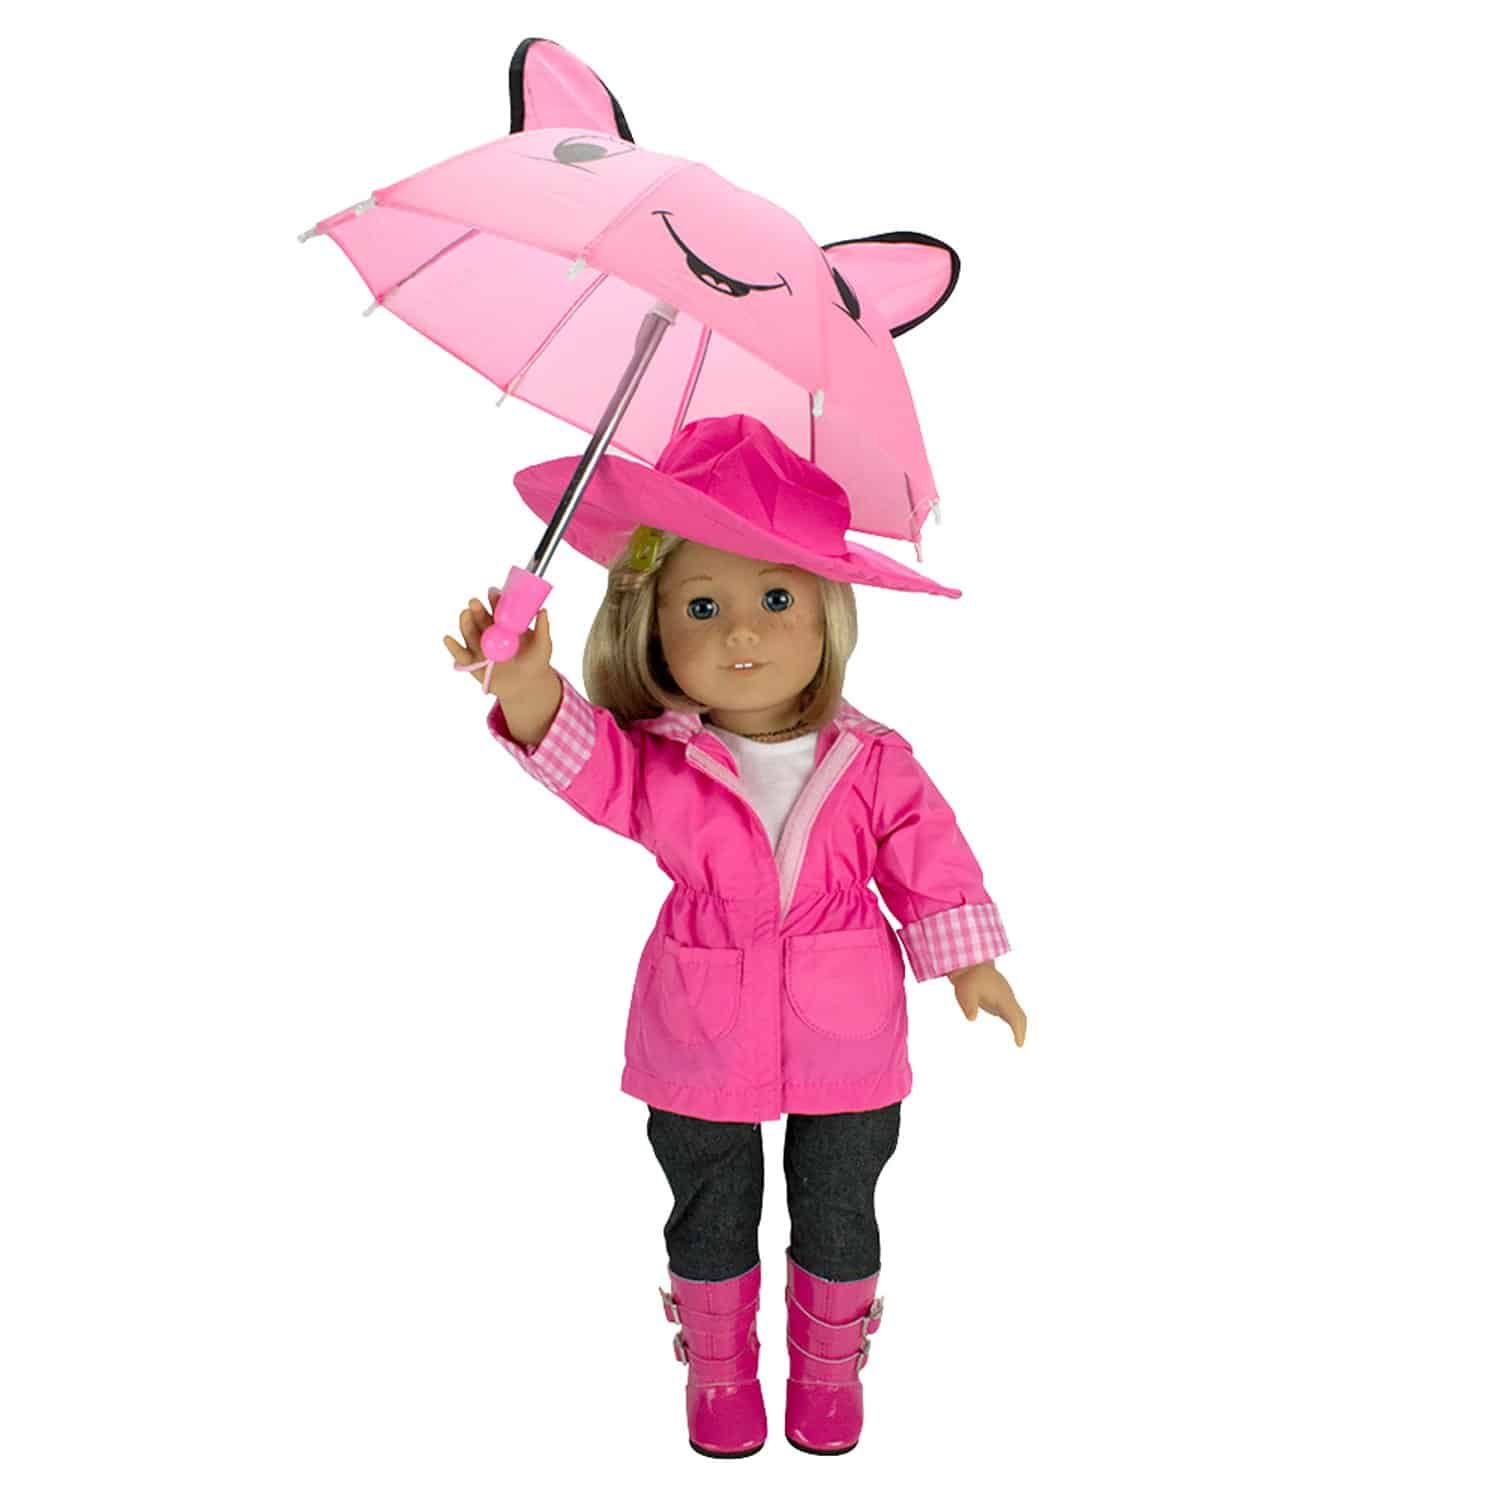 LIGHTNING DEAL ALERT! Rain Coat Doll Clothes for American Girl Dolls – 46%